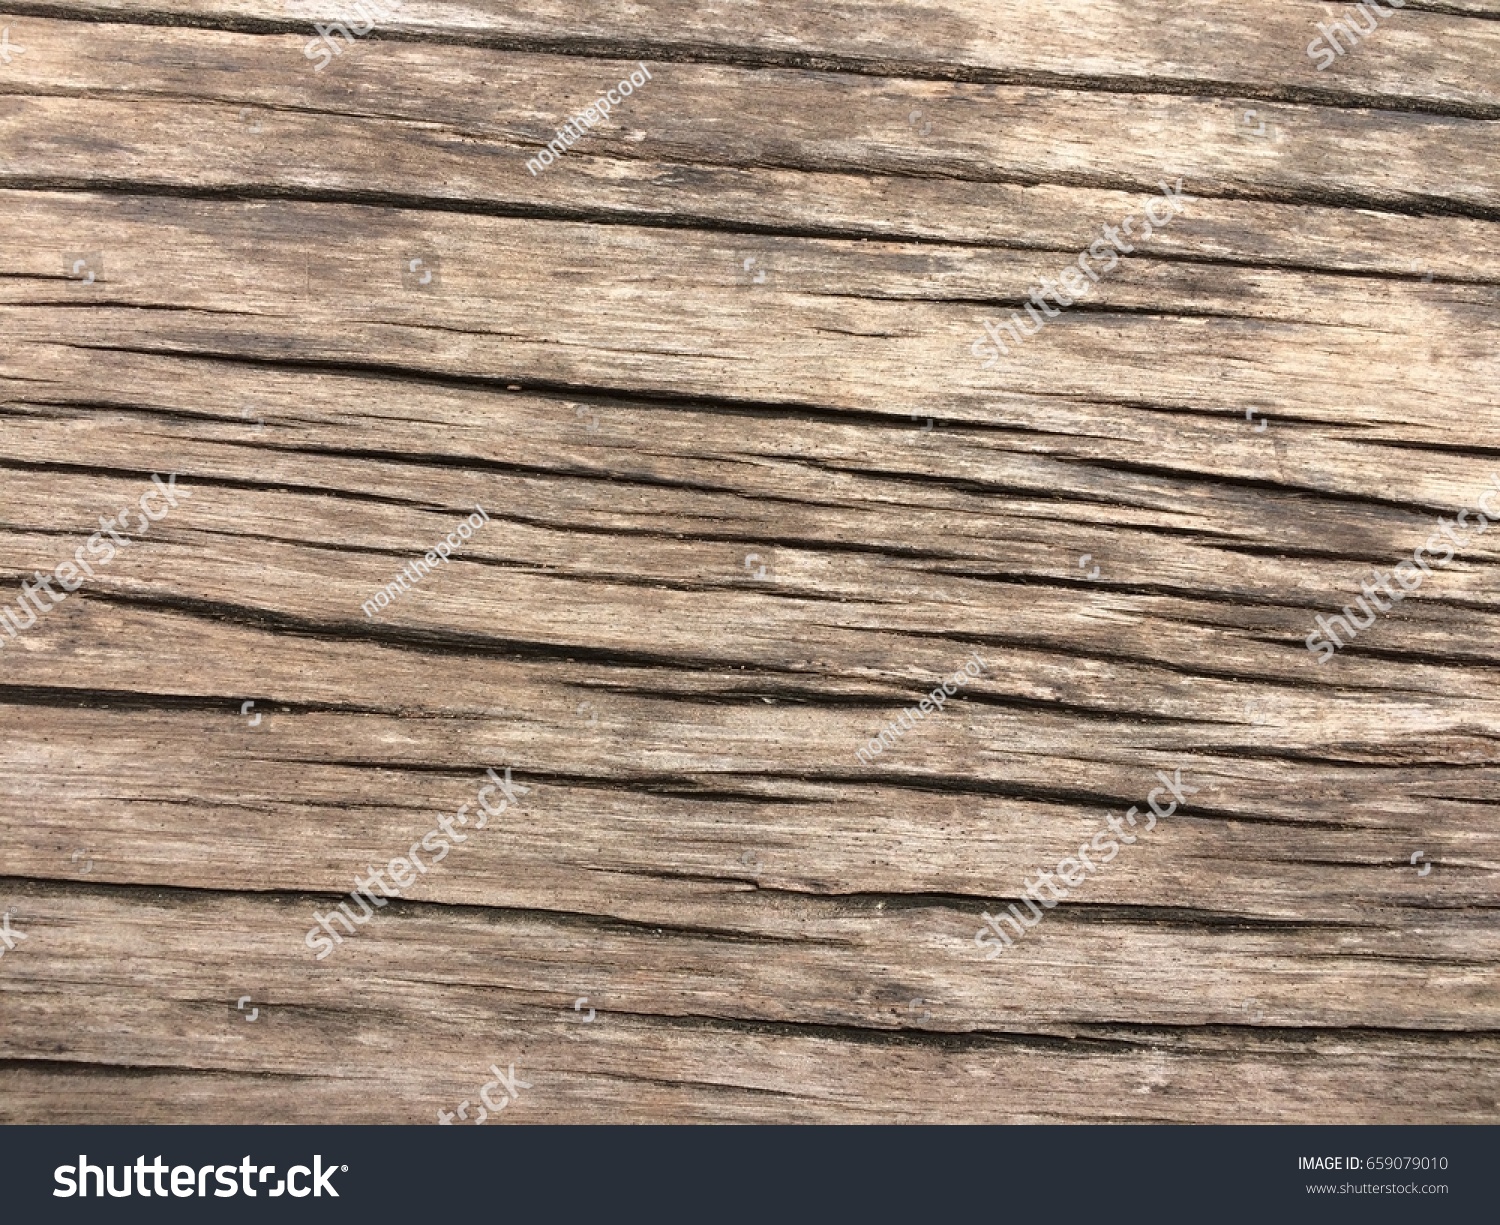 Natural Crack Wood Texture Stock Photo 659079010 | Shutterstock